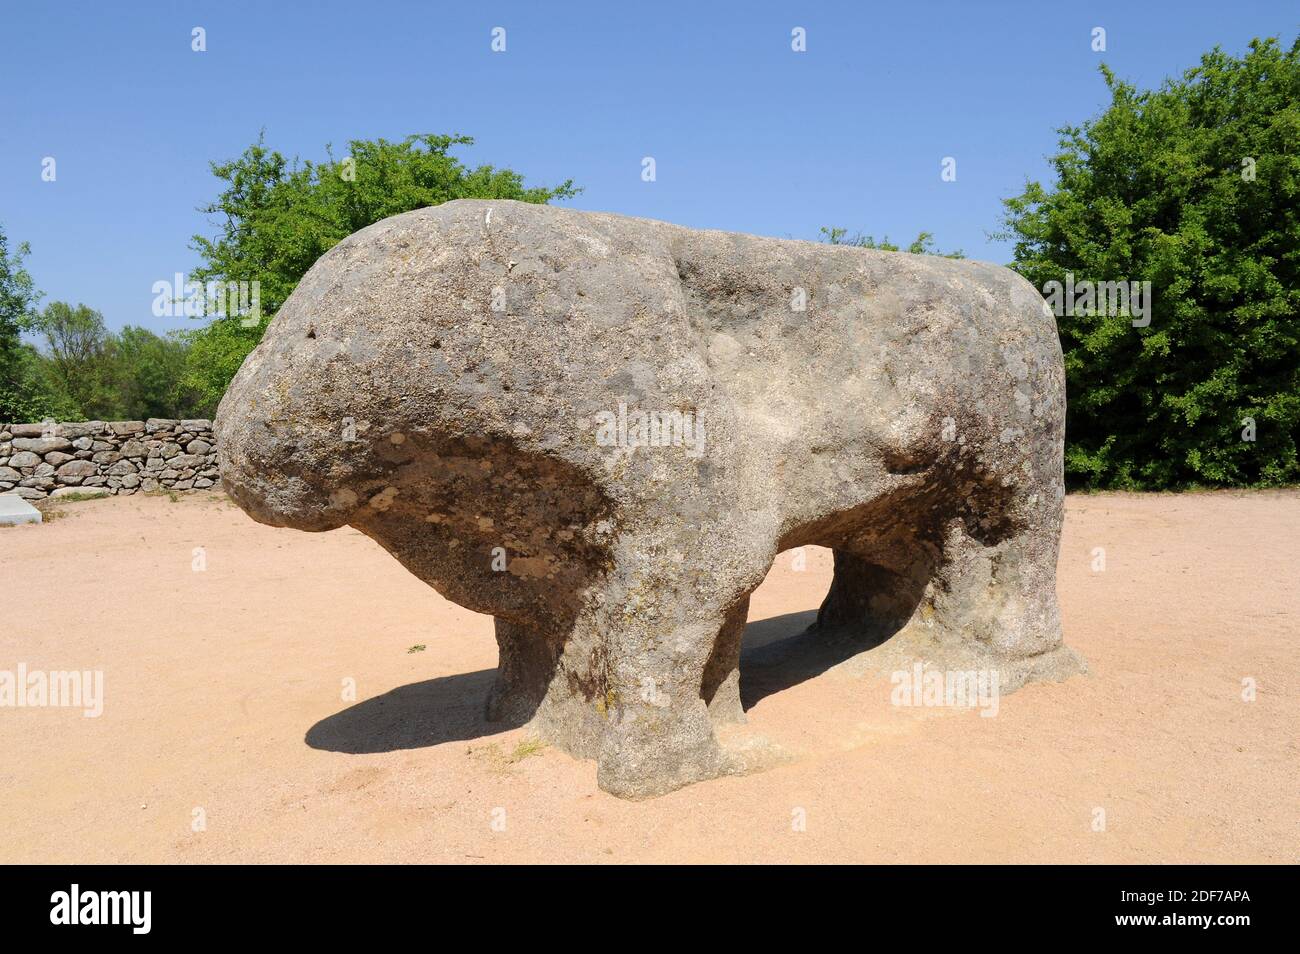 Toros de Guisando, culture celtique (vetones). Taureaux en granit. El Tiemblo, province d'Avila, Castilla y Leon; Espagne. Banque D'Images